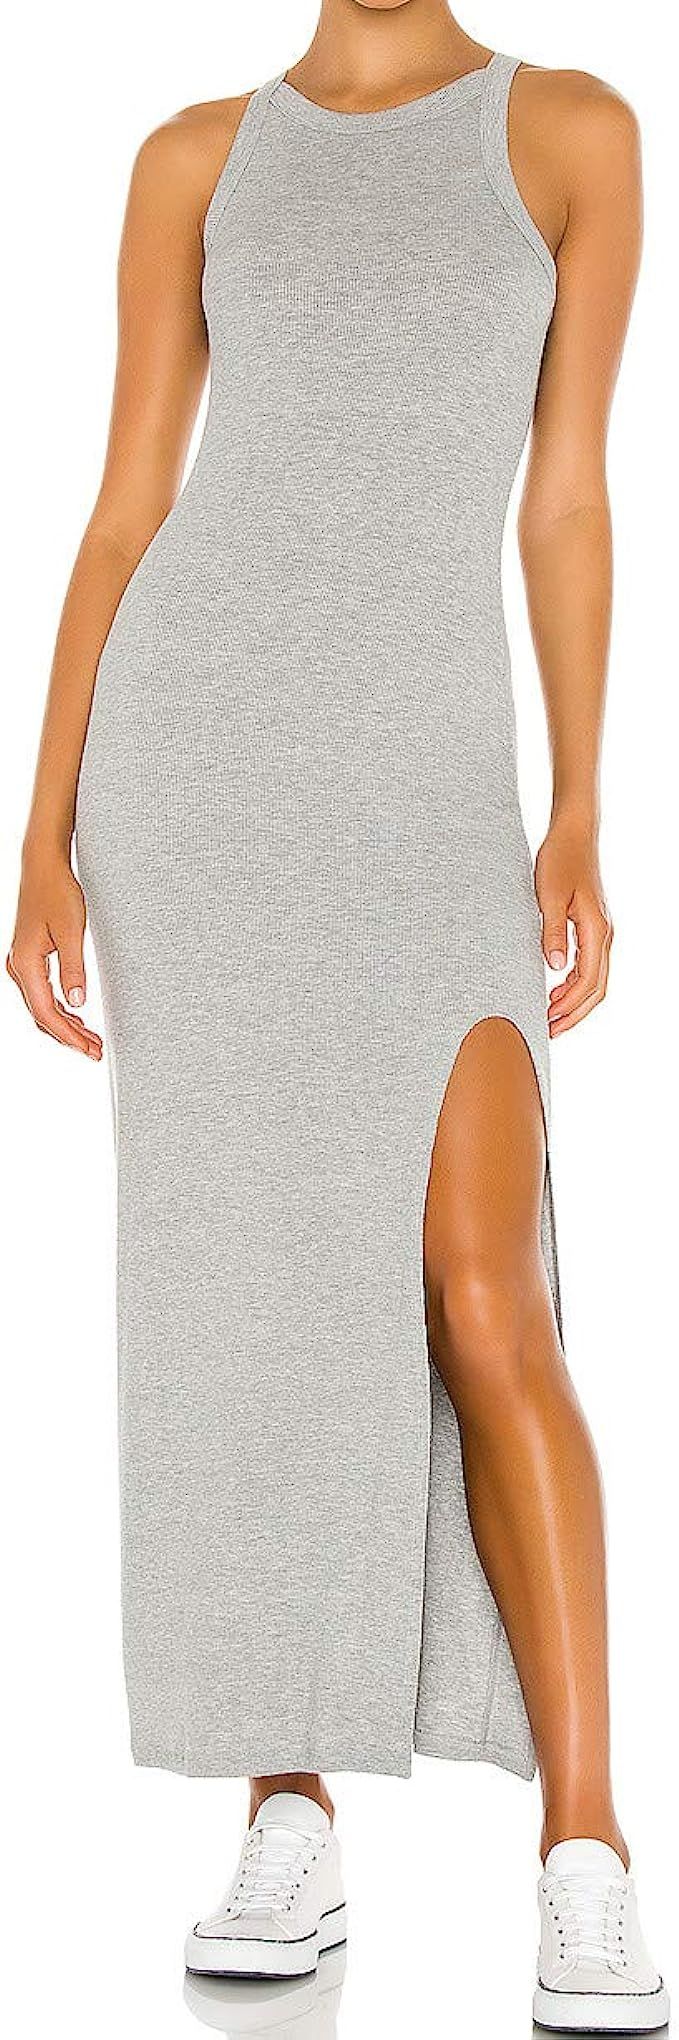 JLCNCUE Women Causal Bodycon Maxi Dress High Side Slit Dresses Scoop Neck Sleeveless Tank Dress 7... | Amazon (US)